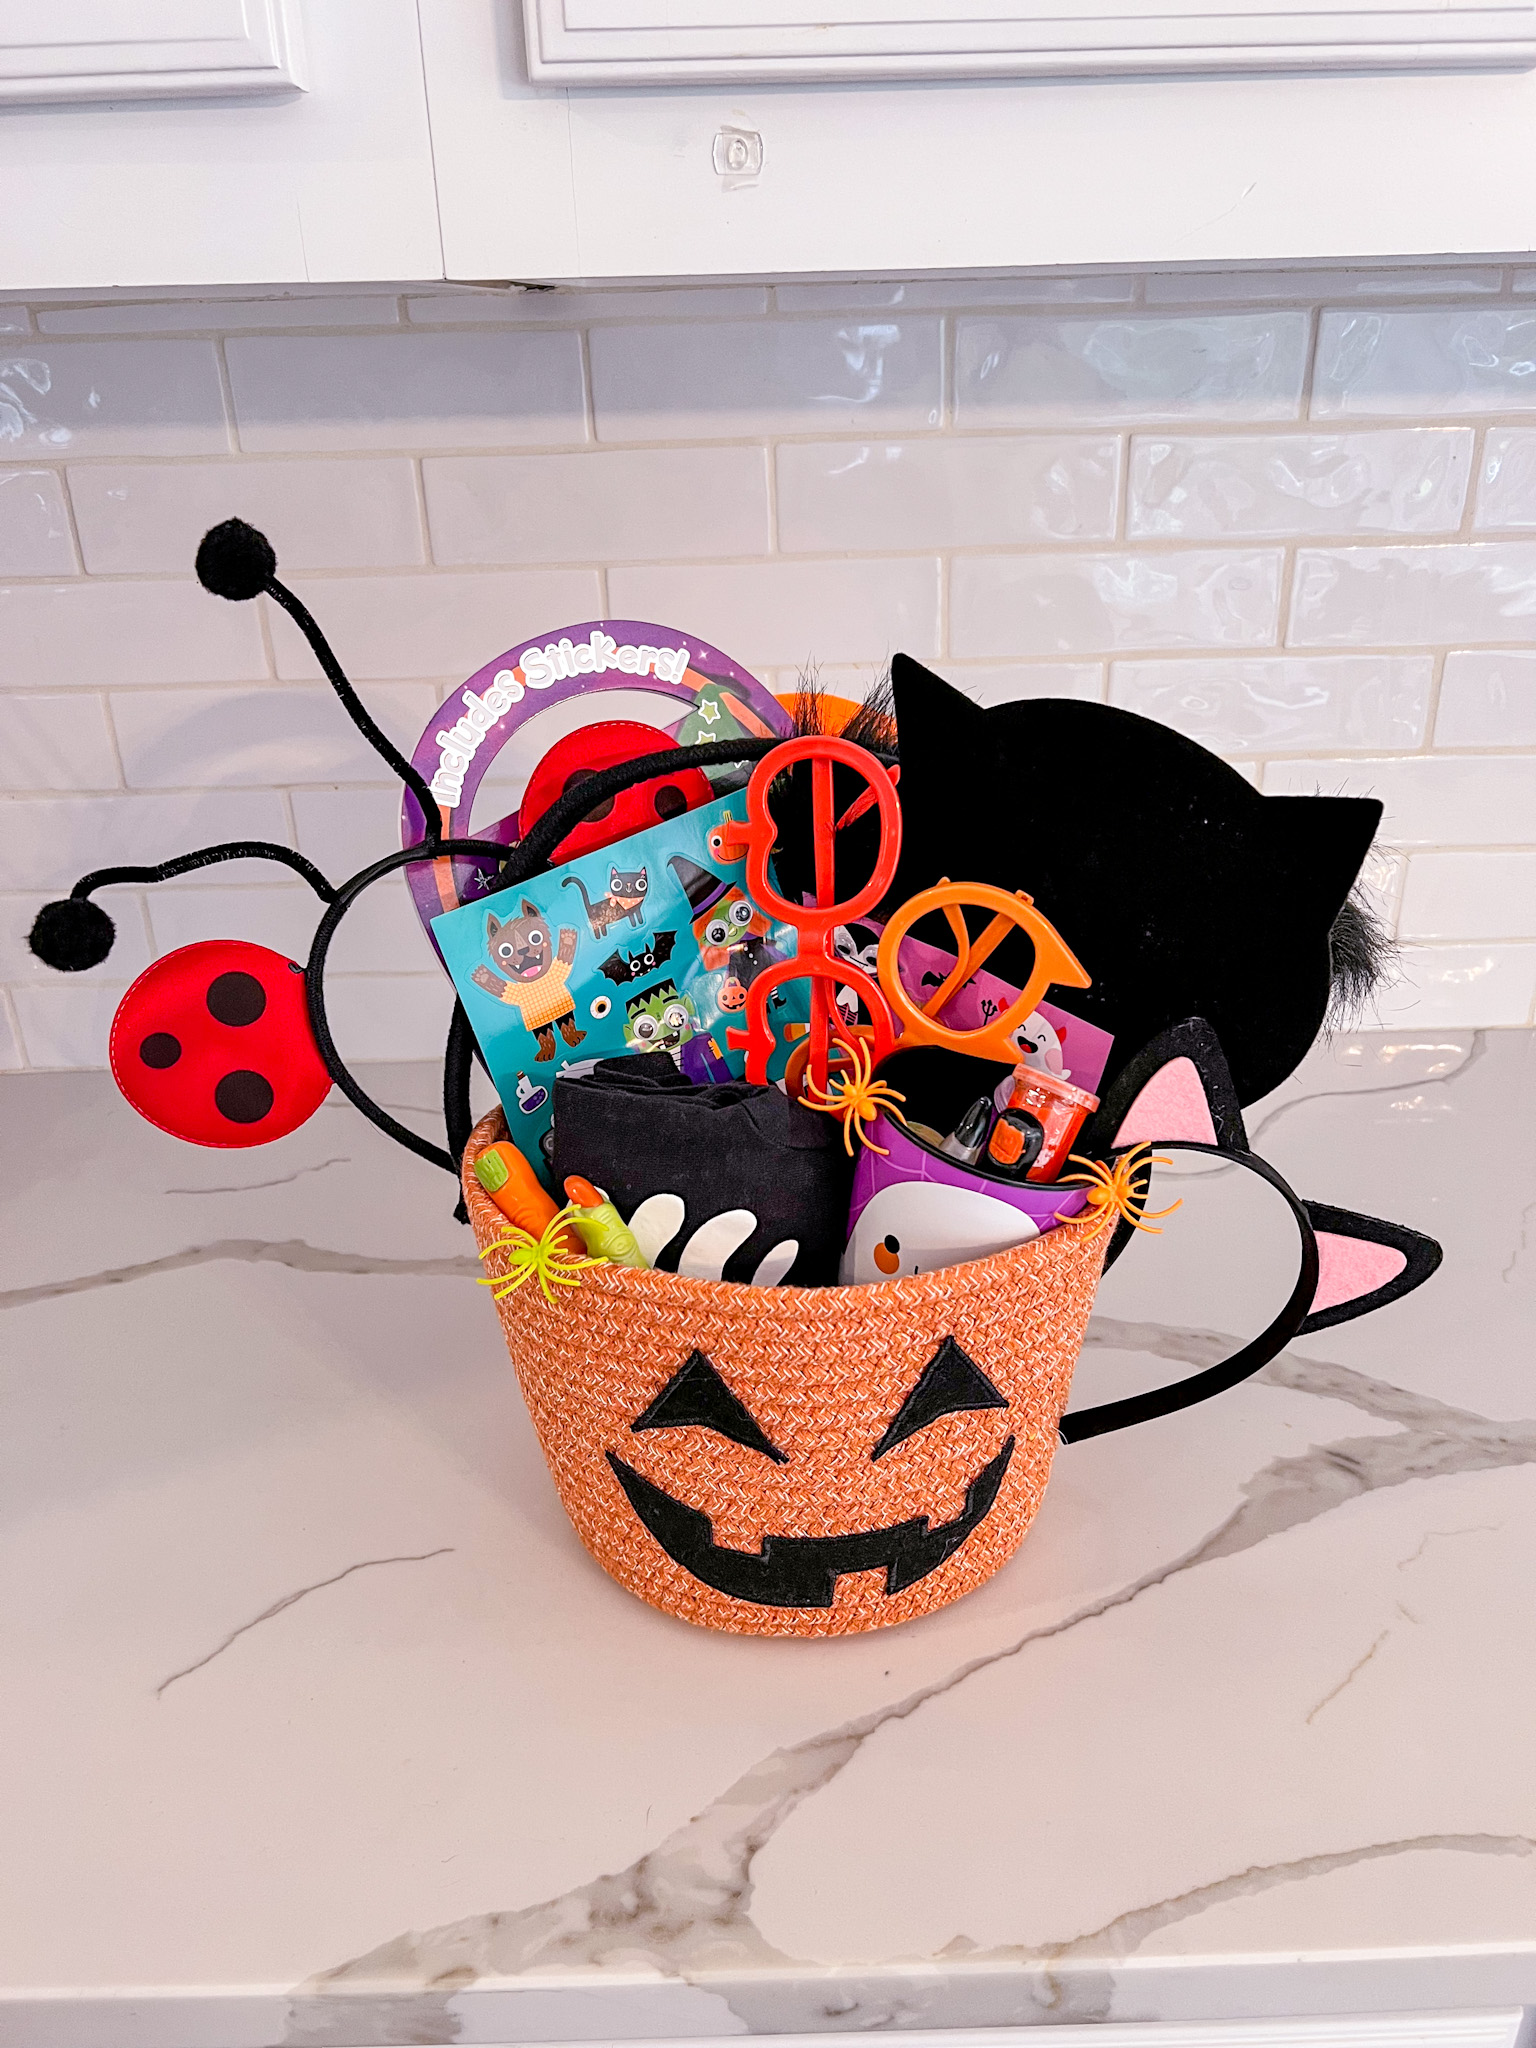 15 Halloween Treat Ideas That Aren't Candy